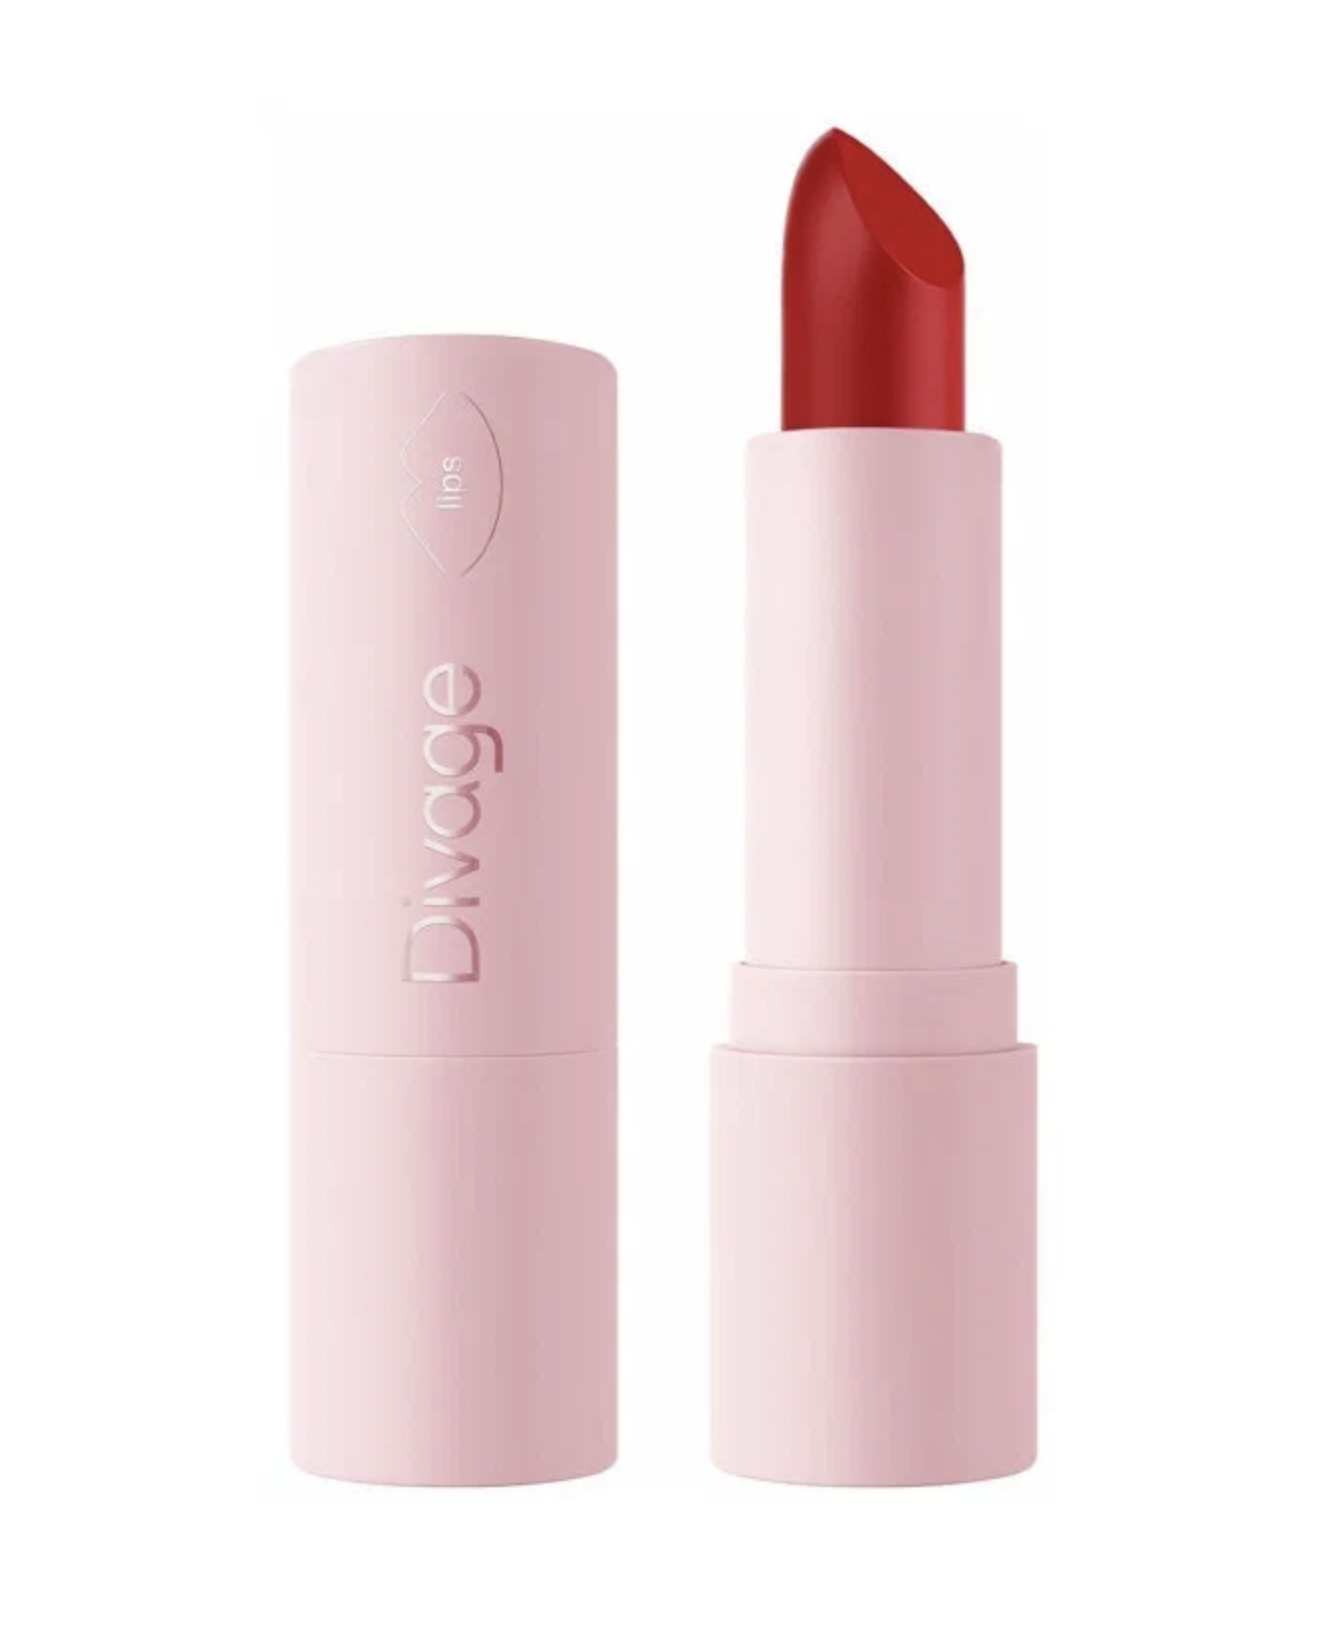   / Divage -    Praline light creamy lipstick  12 Hot Candy 4 